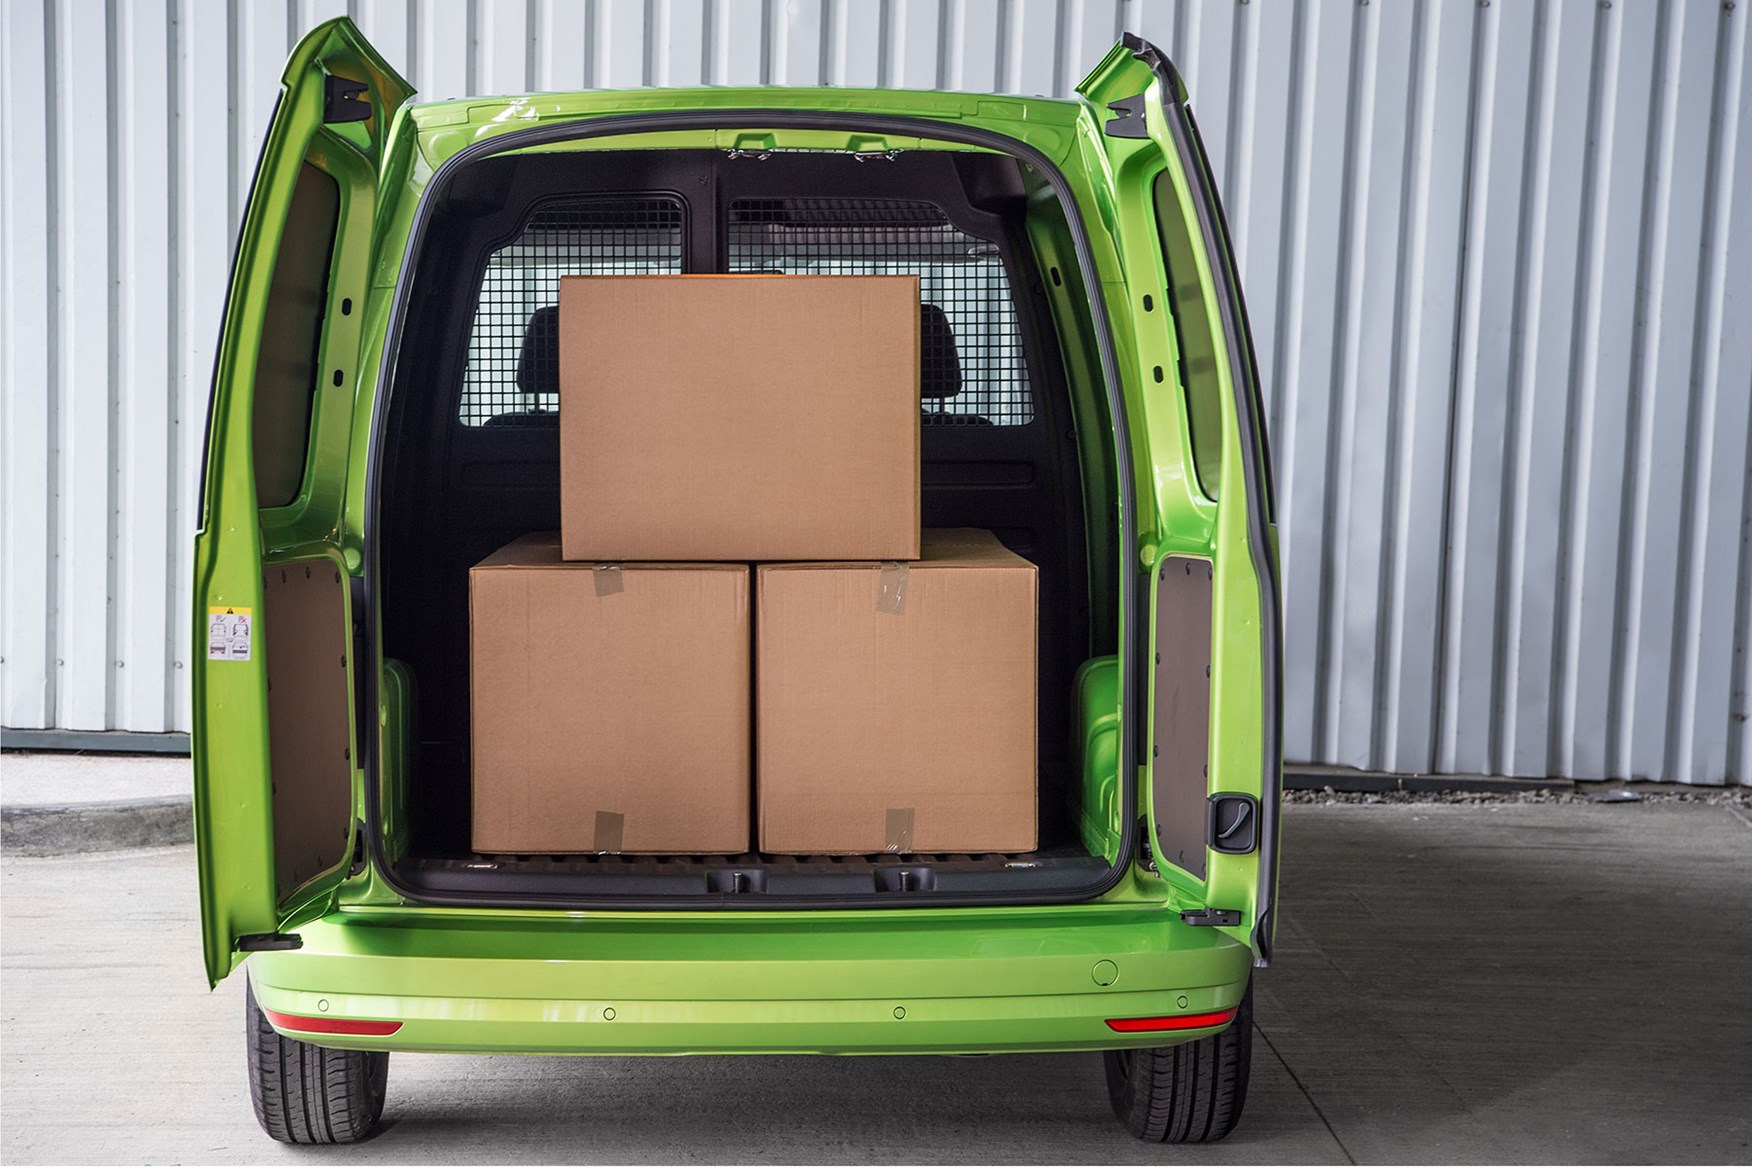 Volkswagen Caddy Van Dimensions 2015 On Capacity Payload